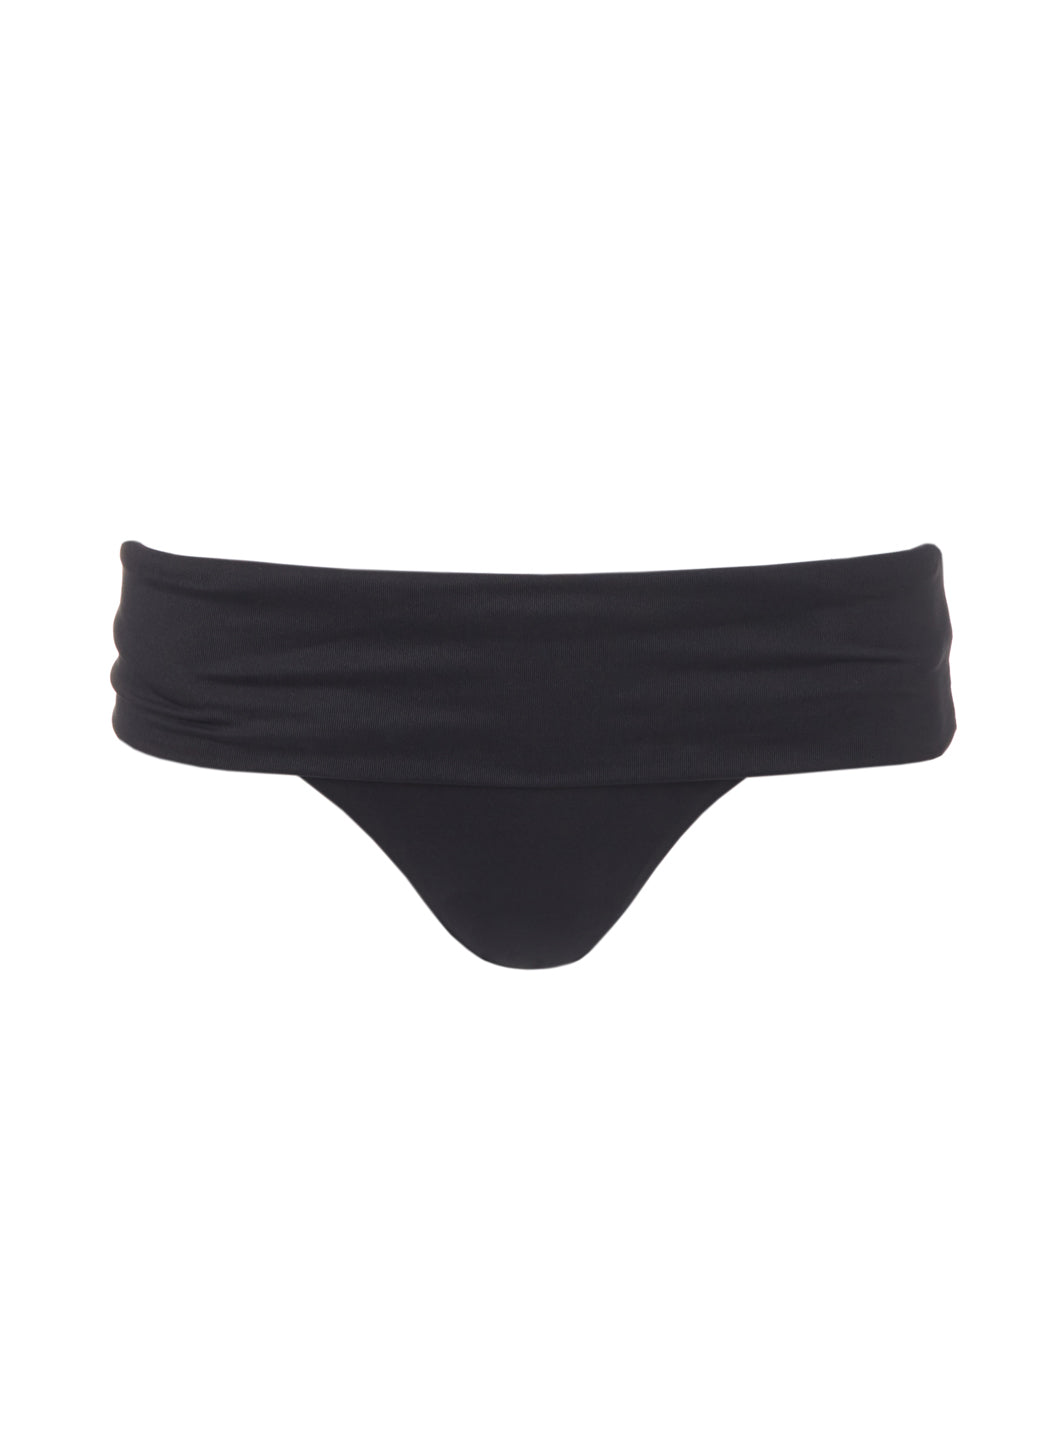 Brussels Black Halterneck Ring Supportive Bikini Bottom